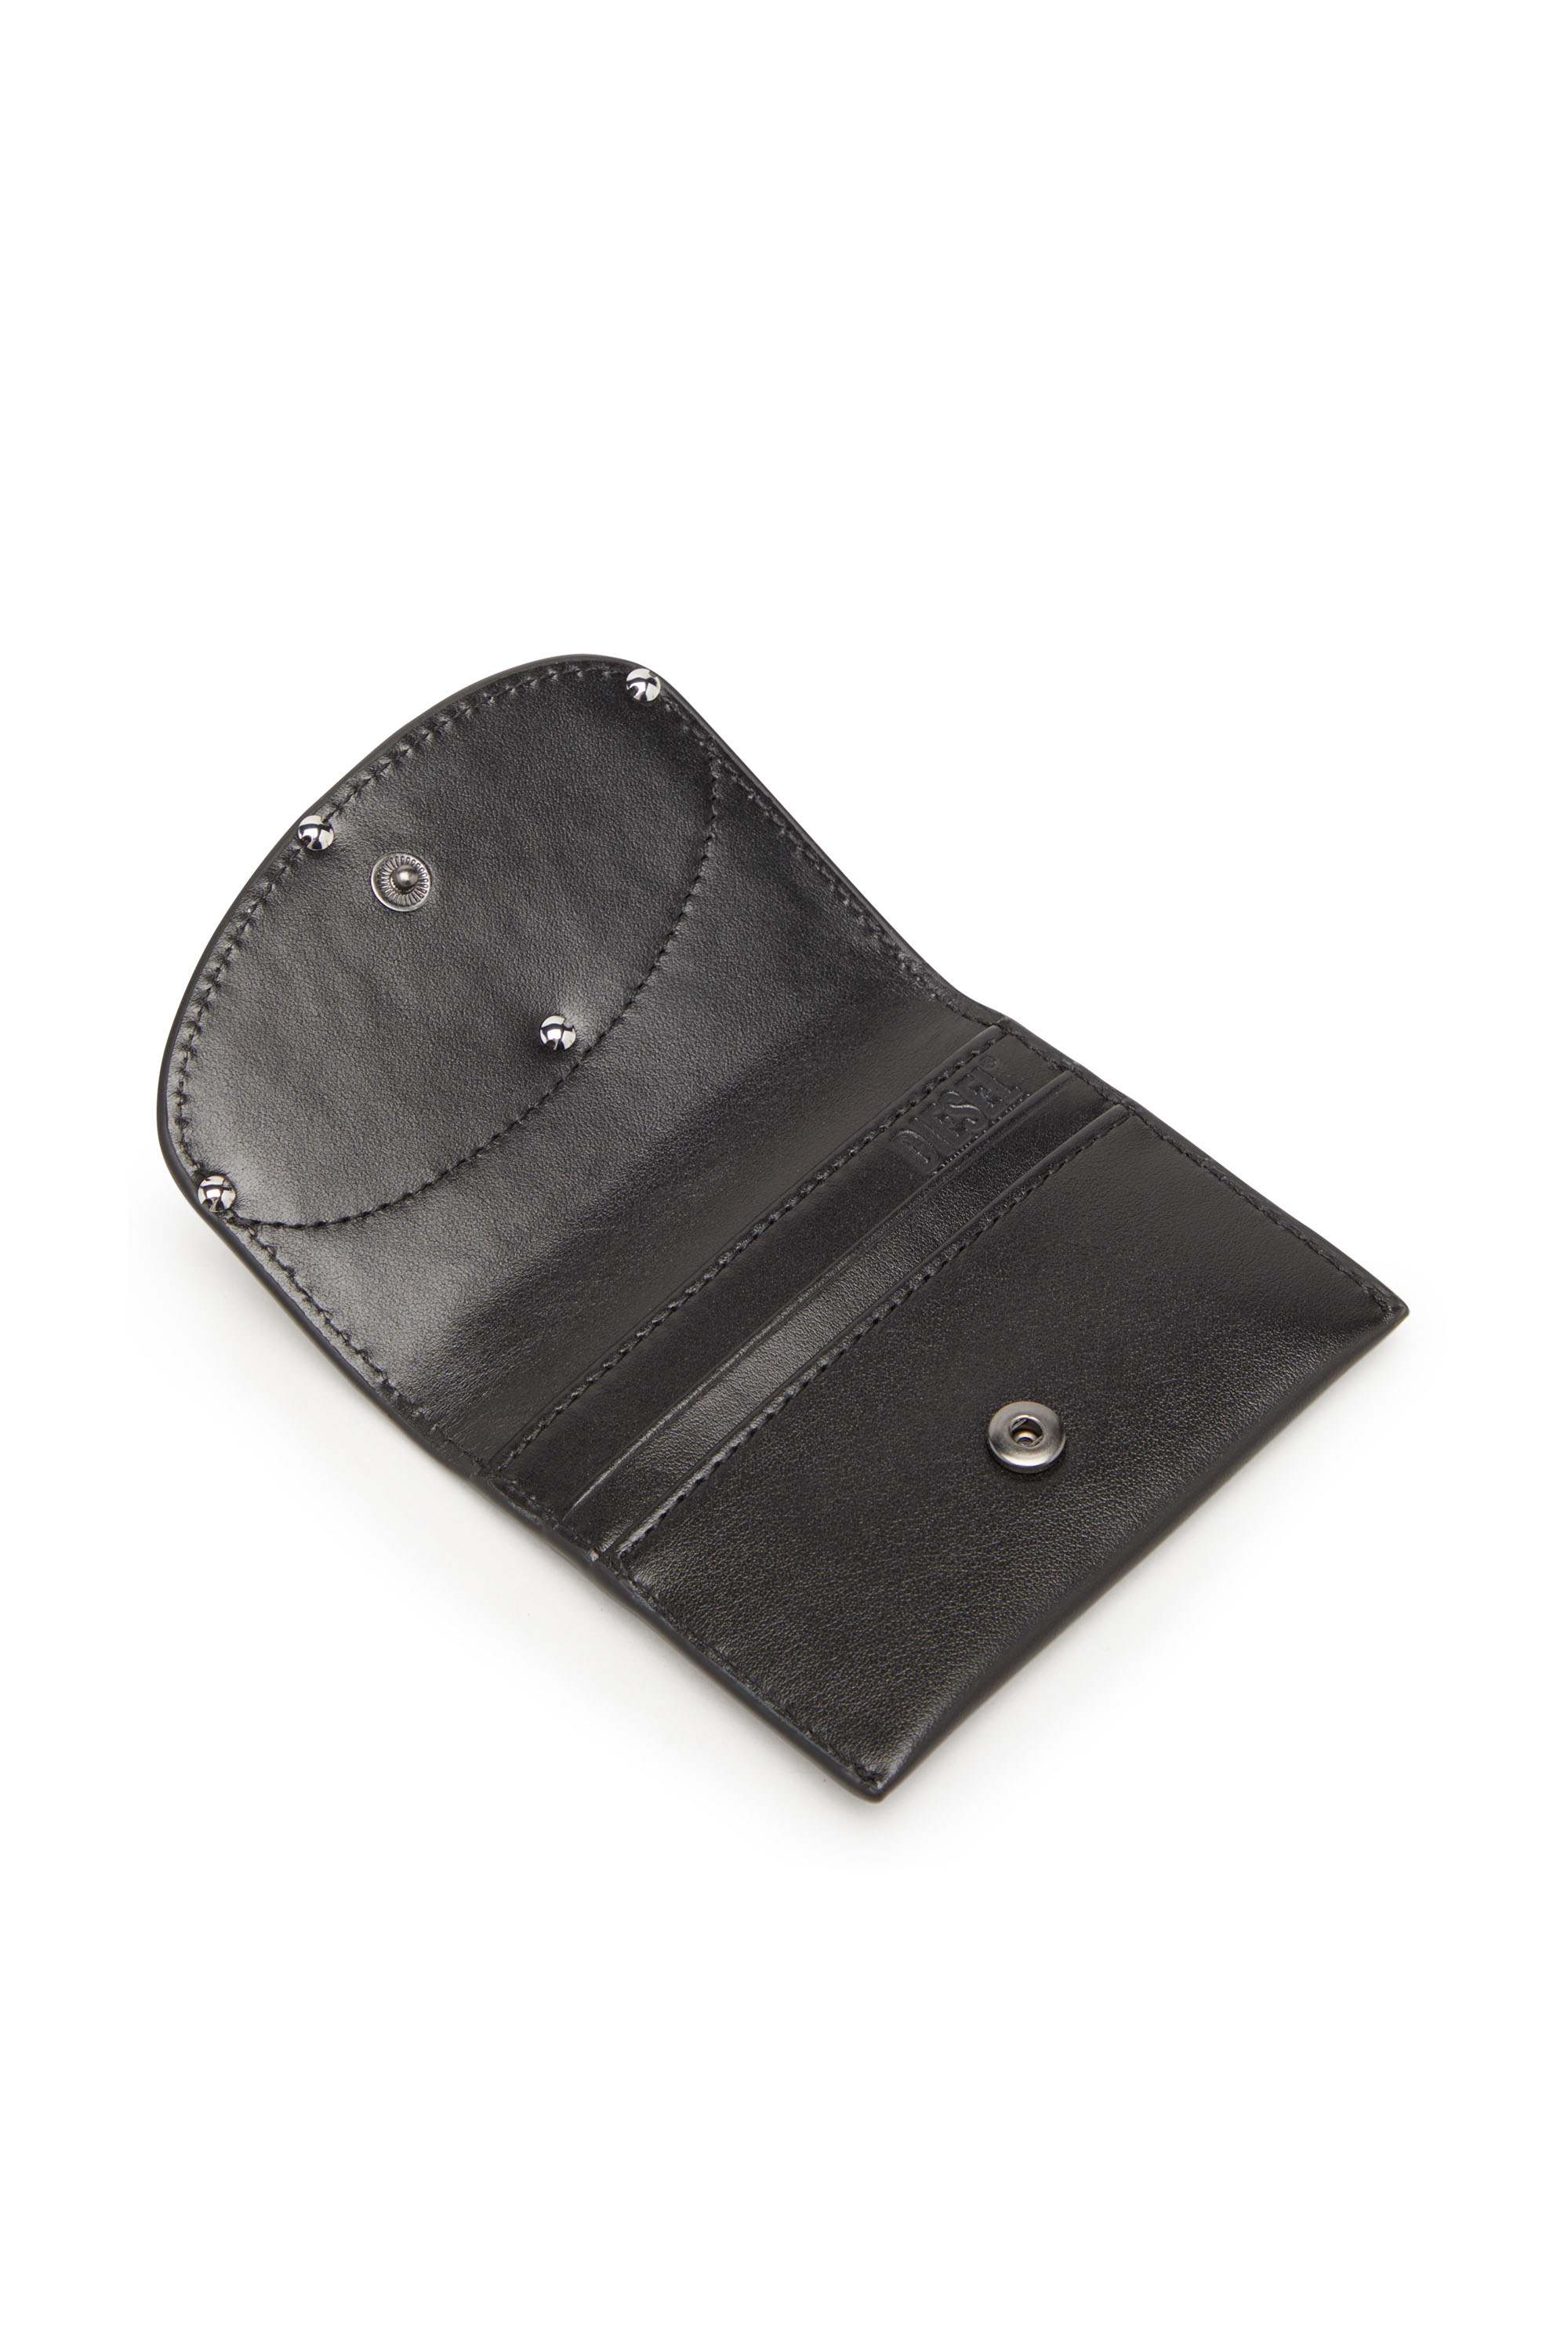 Diesel - HOLI-D CARD HOLDER S, Unisex Bi-fold card holder in smooth leather in Black - Image 3